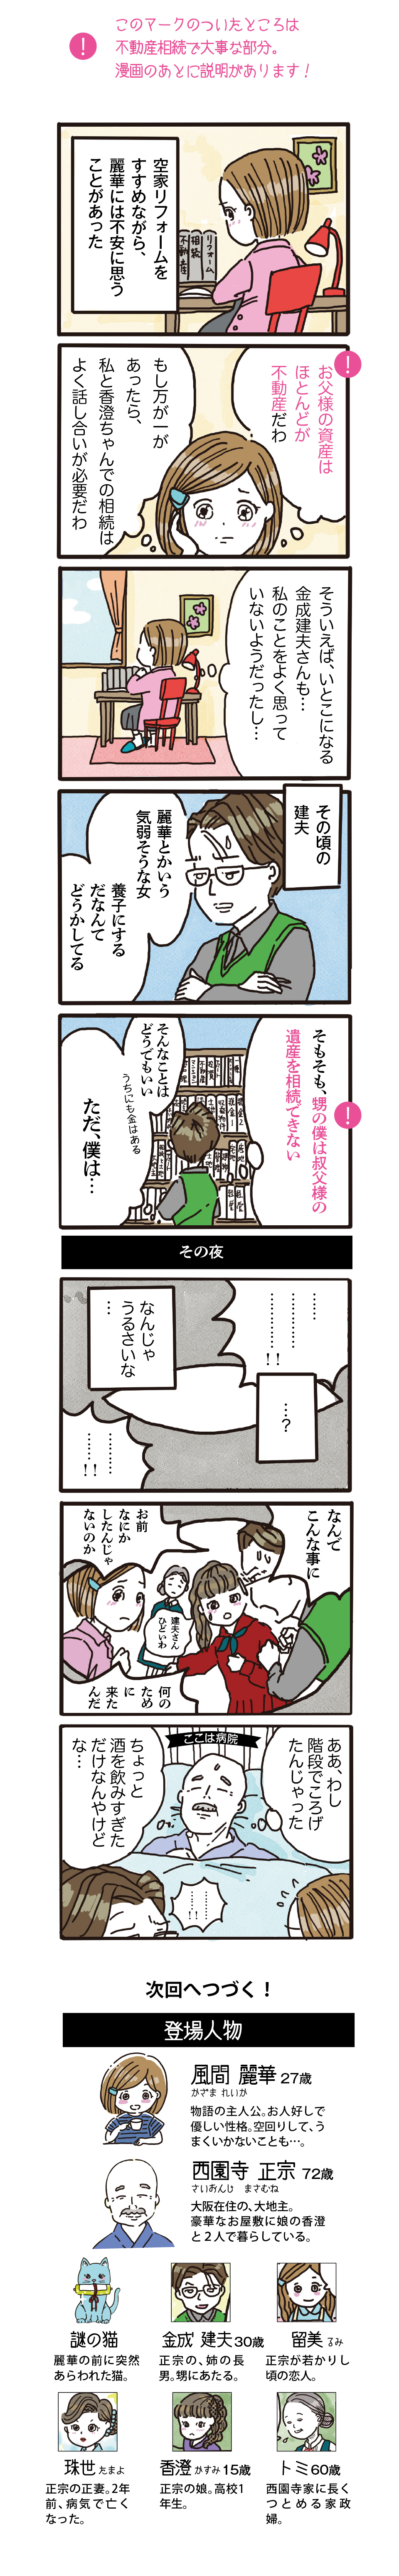 【web漫画】華麗なるSOUZOKU #12